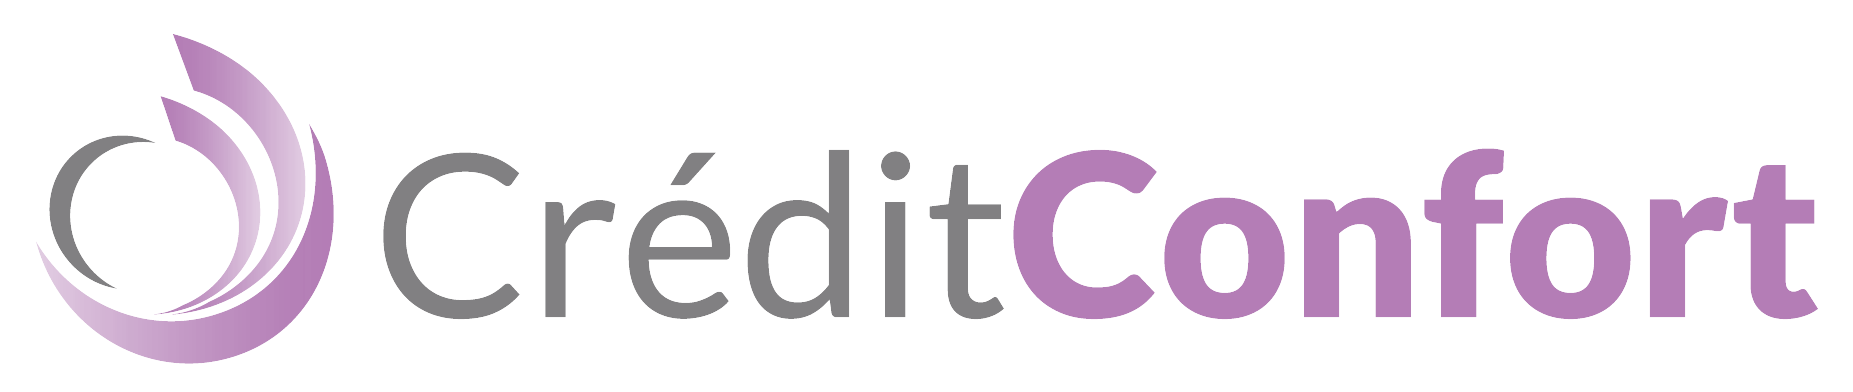 credit_logo